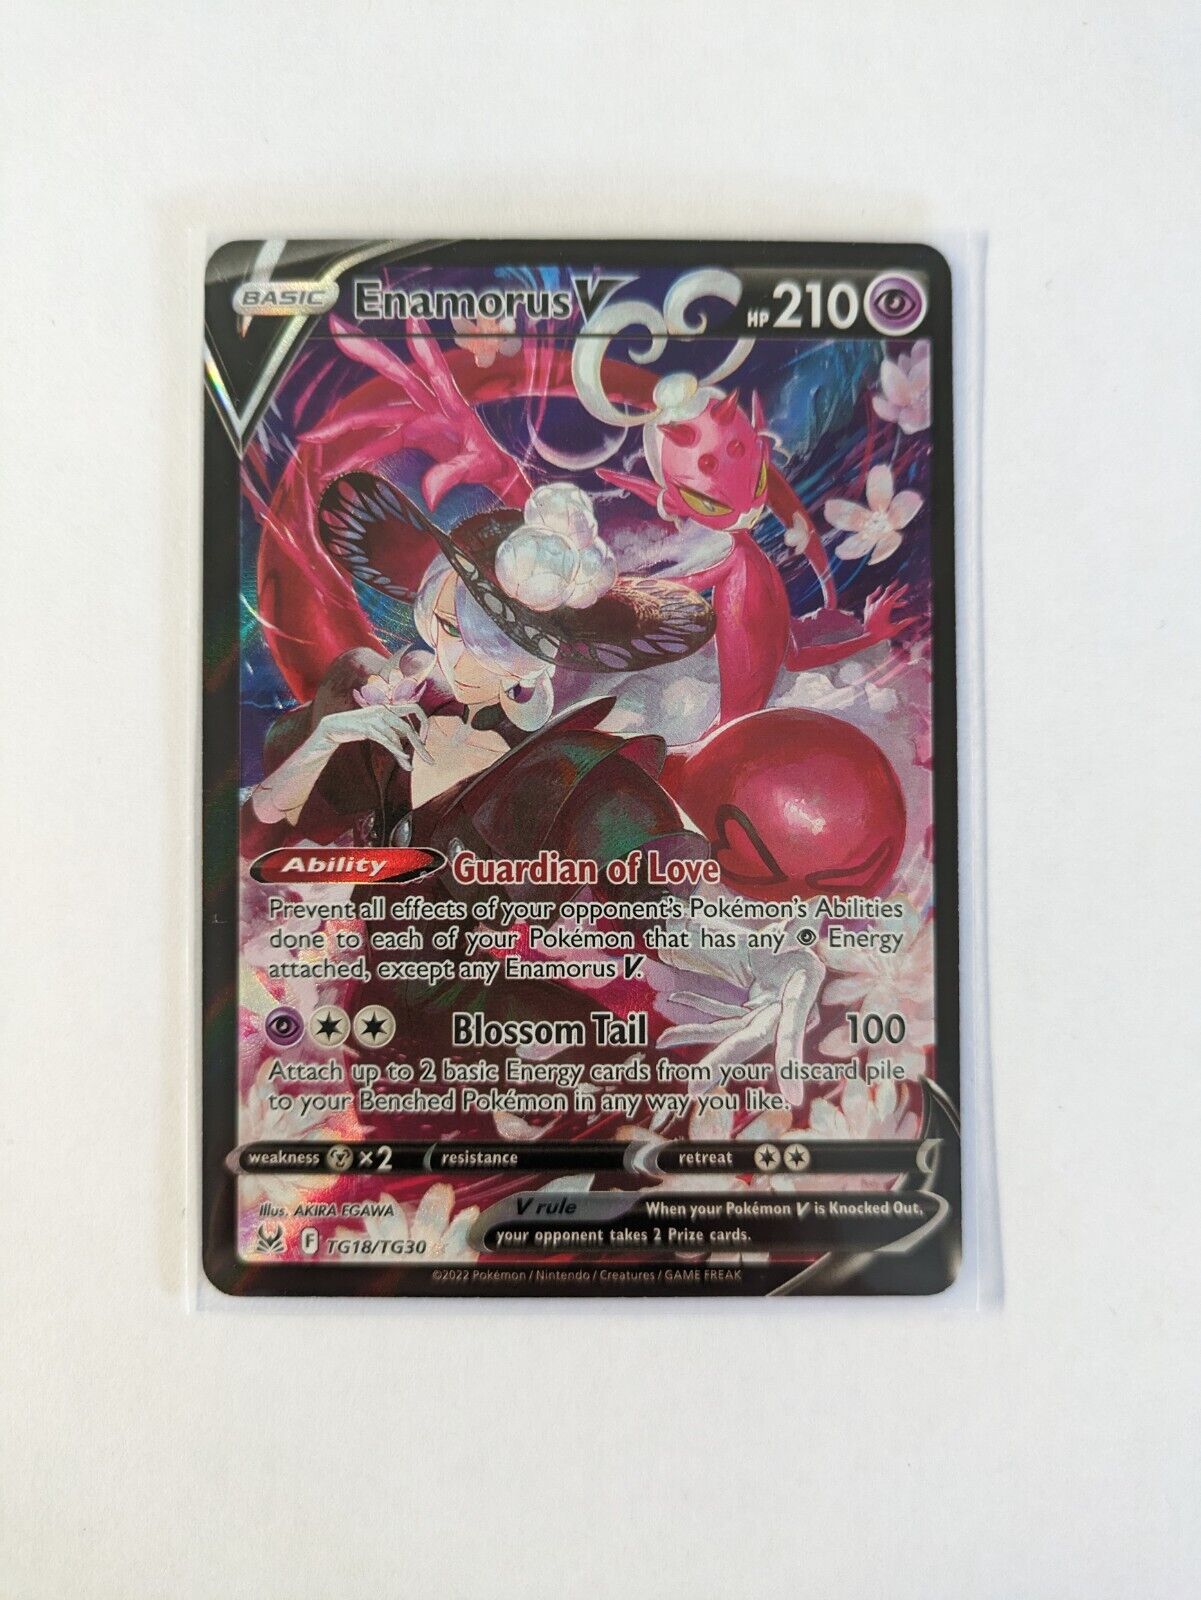 Pokemon - Enamorus V - TG18/TG30 - SWSH Lost Origin - Trainer Gallery Card